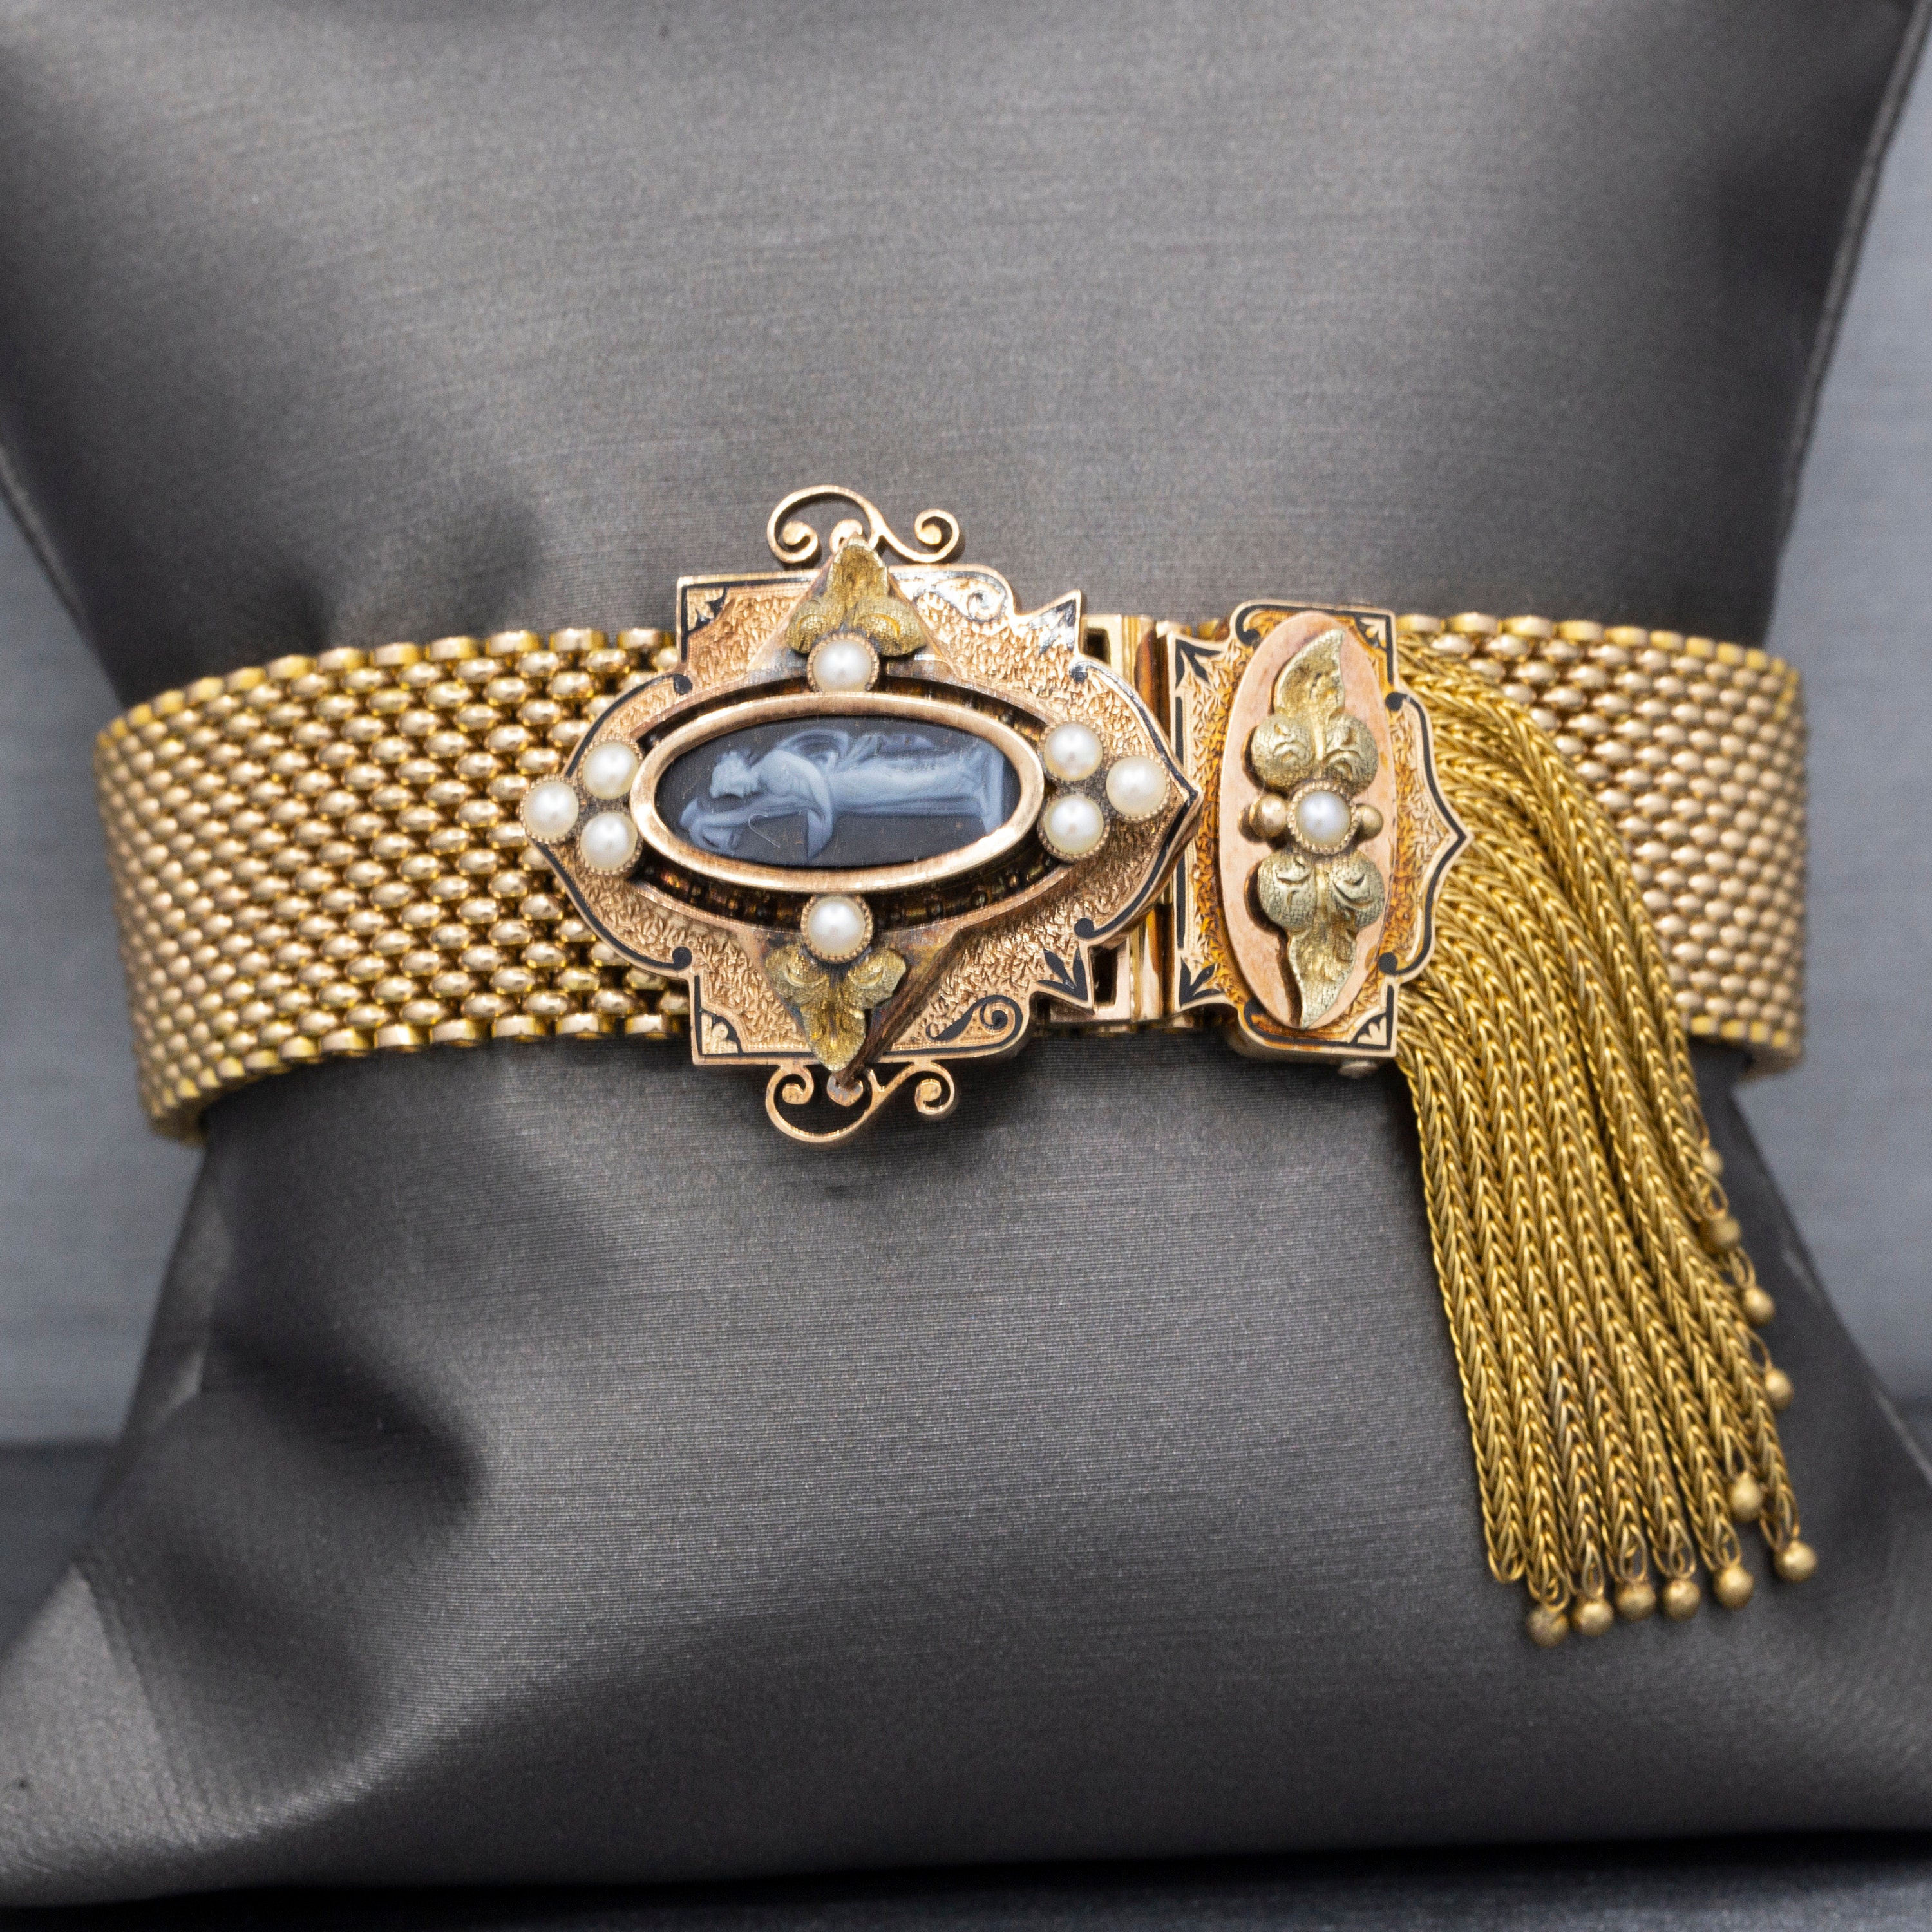 Mesh Gold and Black Snake Bracelet with Faux Opal Eyes | Vintage Style Wrap Bracelet